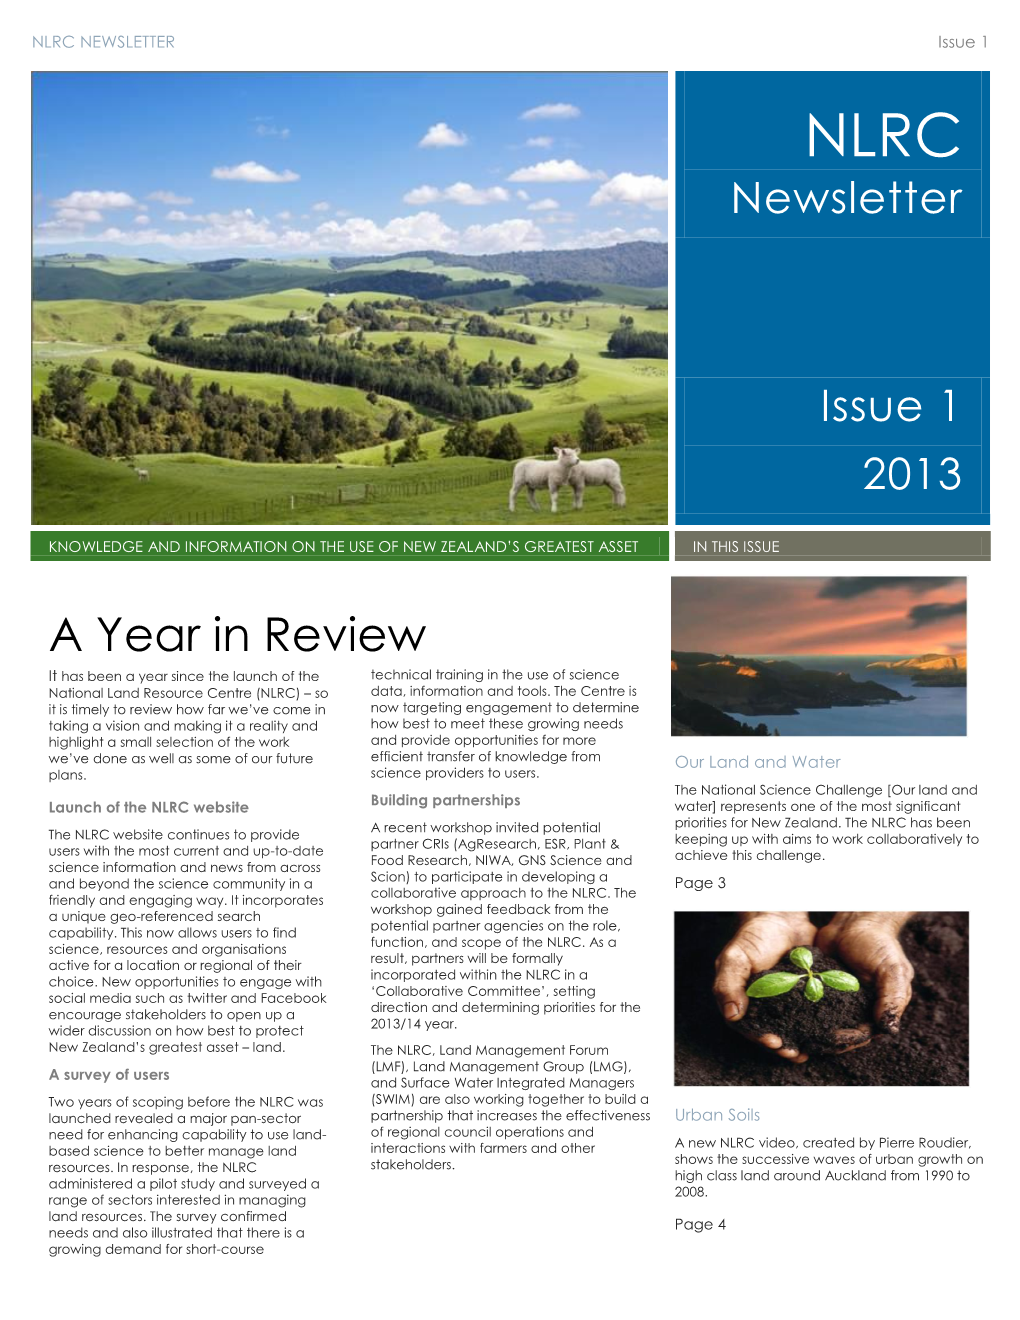 NLRC Newsletter Issue 1, 2013